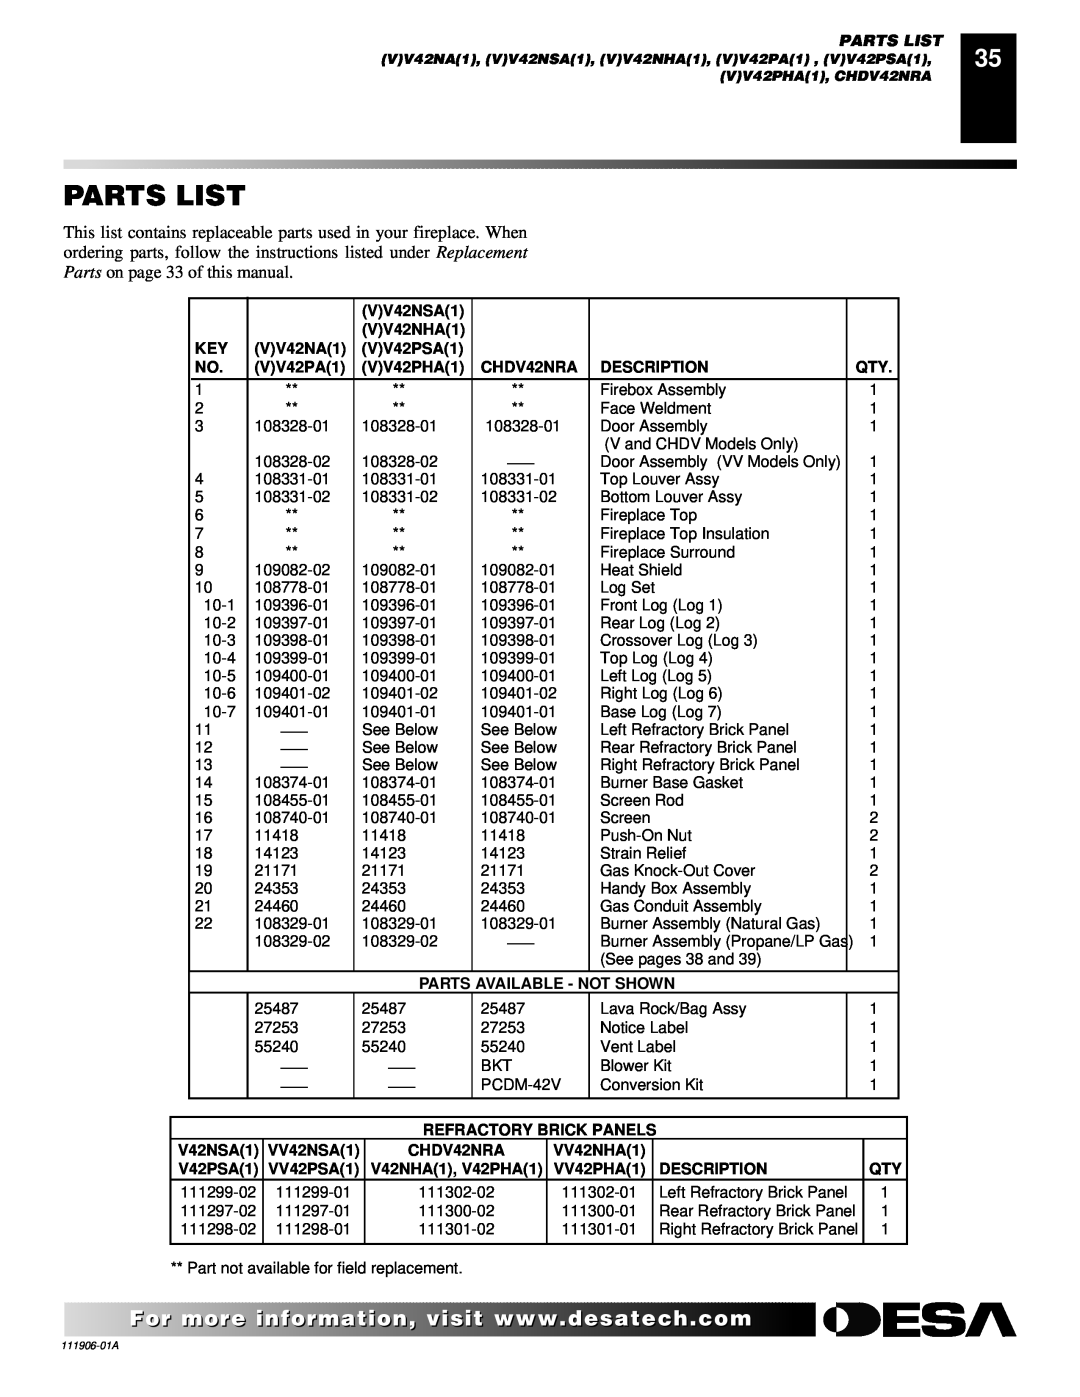 Desa (V)V42NA(1) Parts List, VV42NSA1, VV42NHA1, VV42NA1, VV42PSA1, VV42PA1, VV42PHA1, CHDV42NRA, Description 